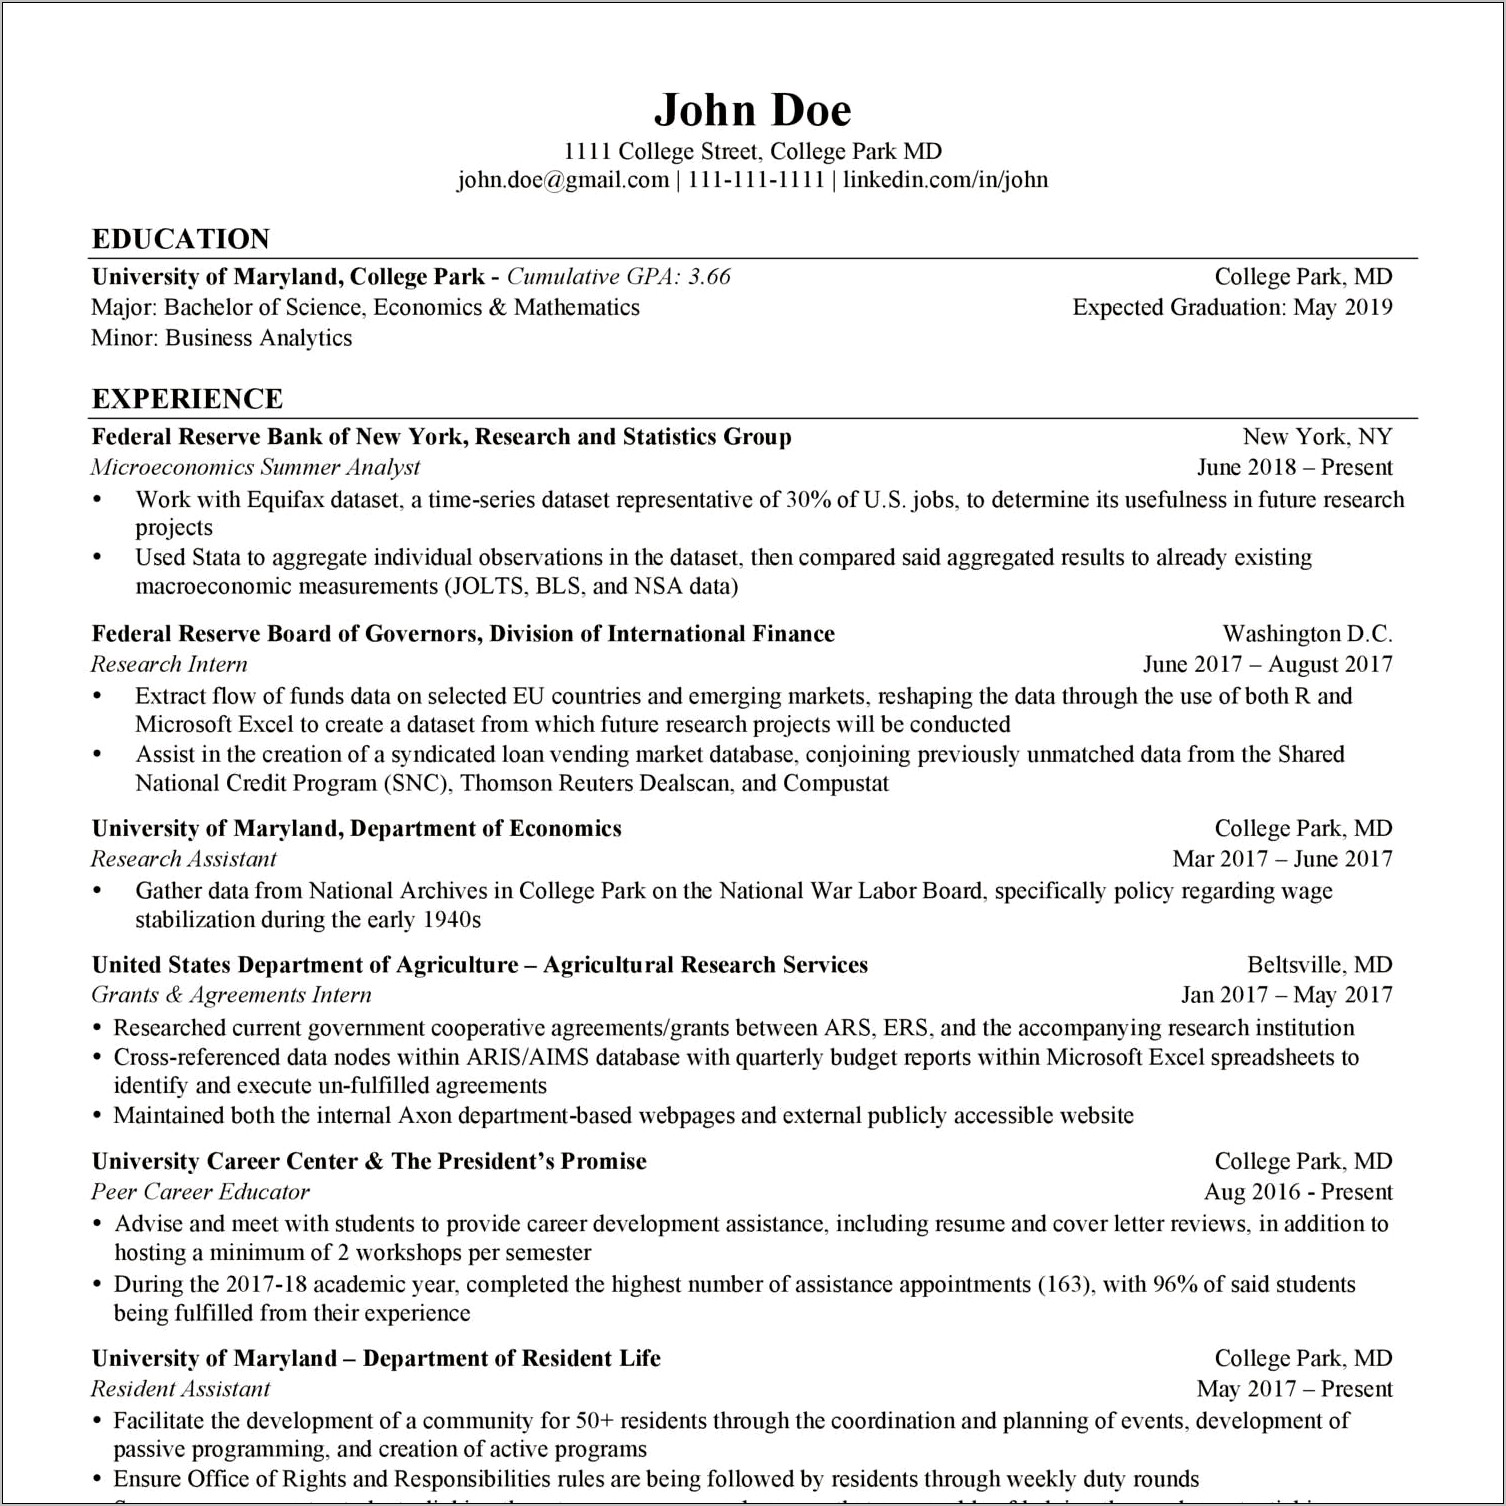 Masshire Resume Sample John Doe